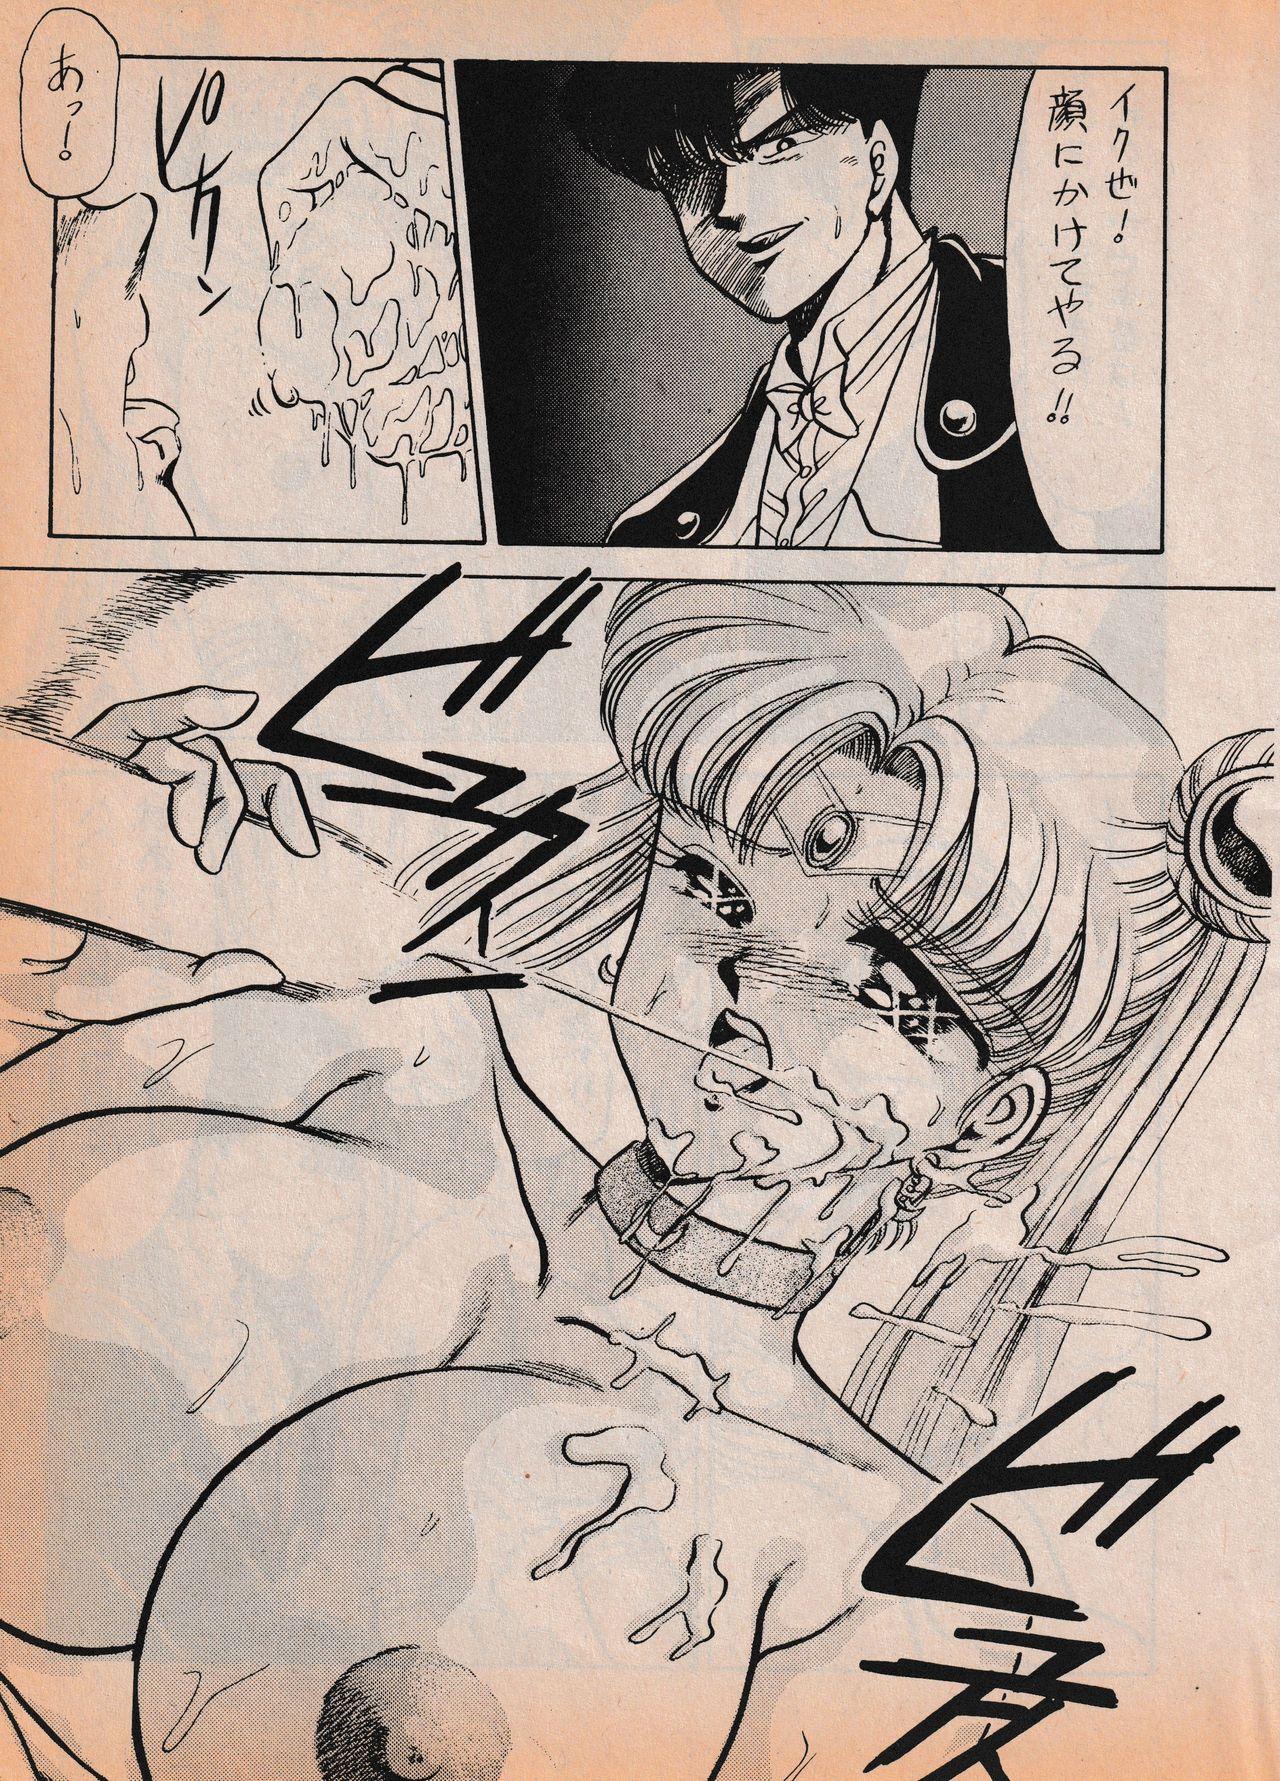 Hardcore Porn Sailor X vol. 7 - The Kama Sutra Of Pain - Sailor moon Tenchi muyo G gundam Beach - Page 6